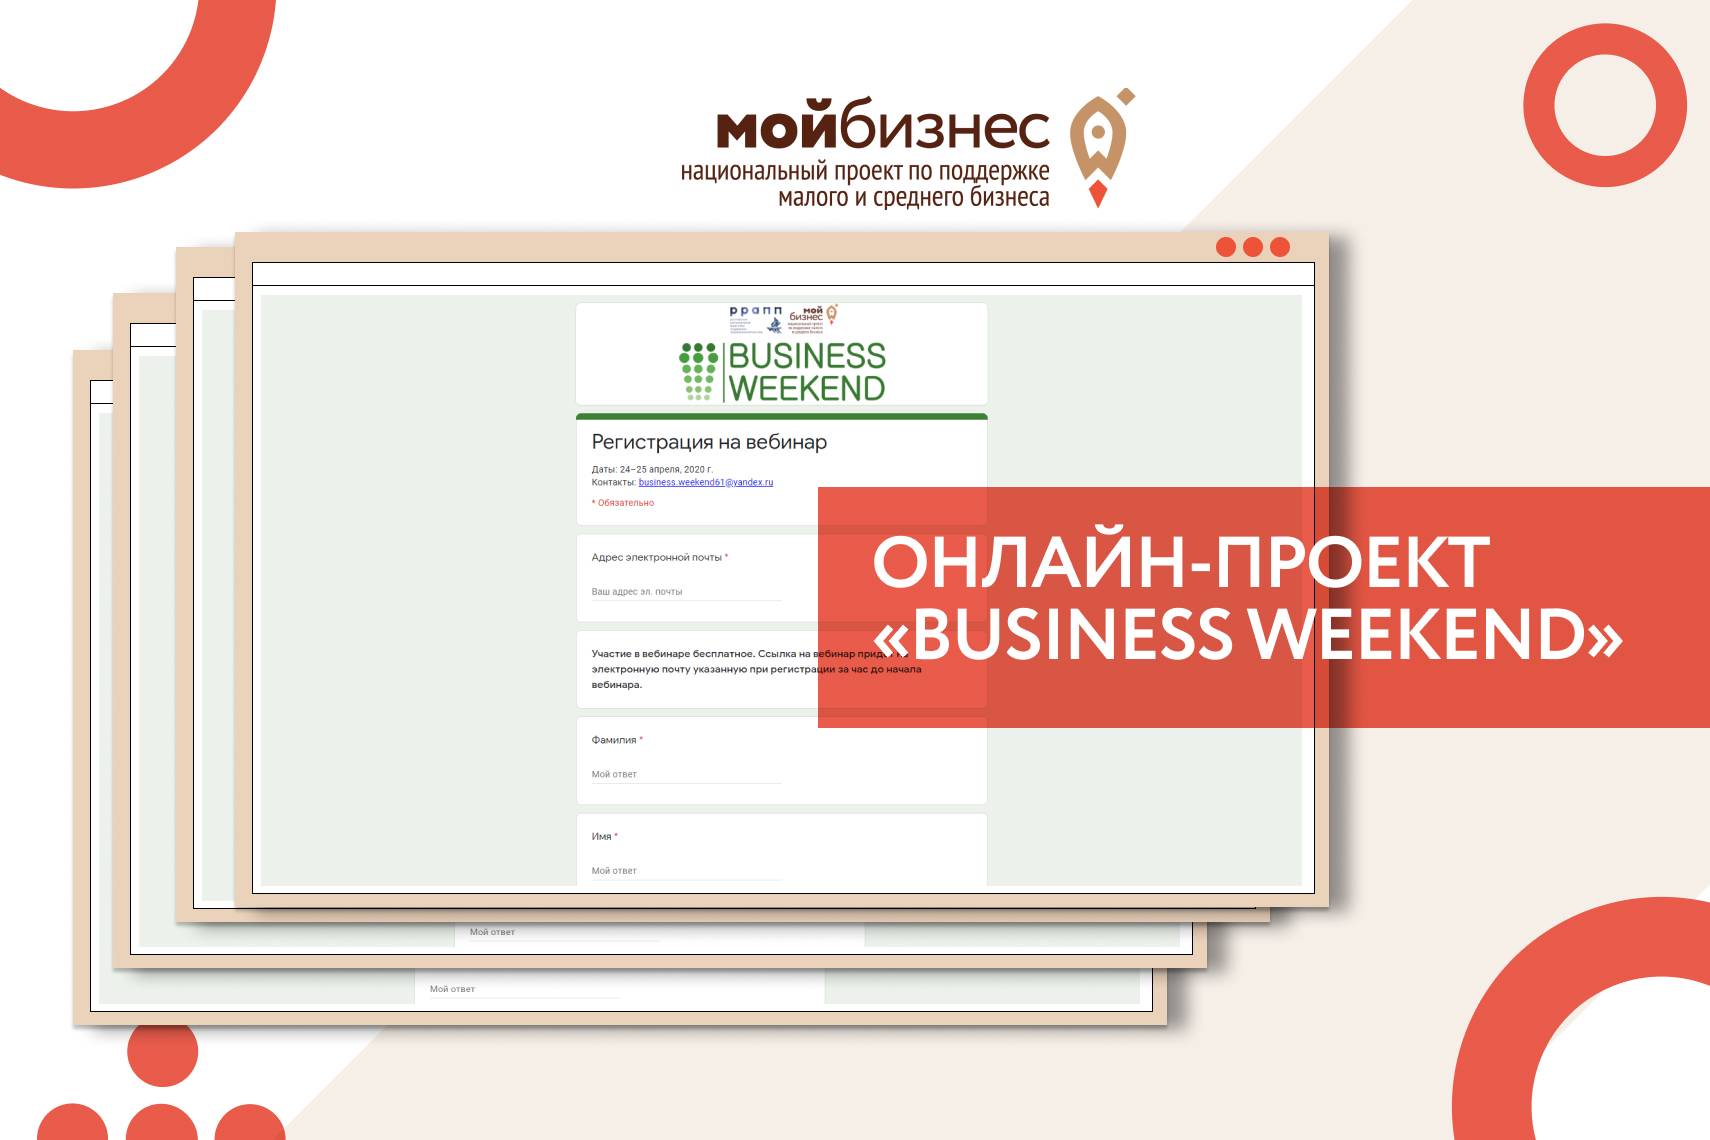 Онлайн-проект «Business Weekend» пройдет  на площадке центра «Мой бизнес» в г. Новочеркасске